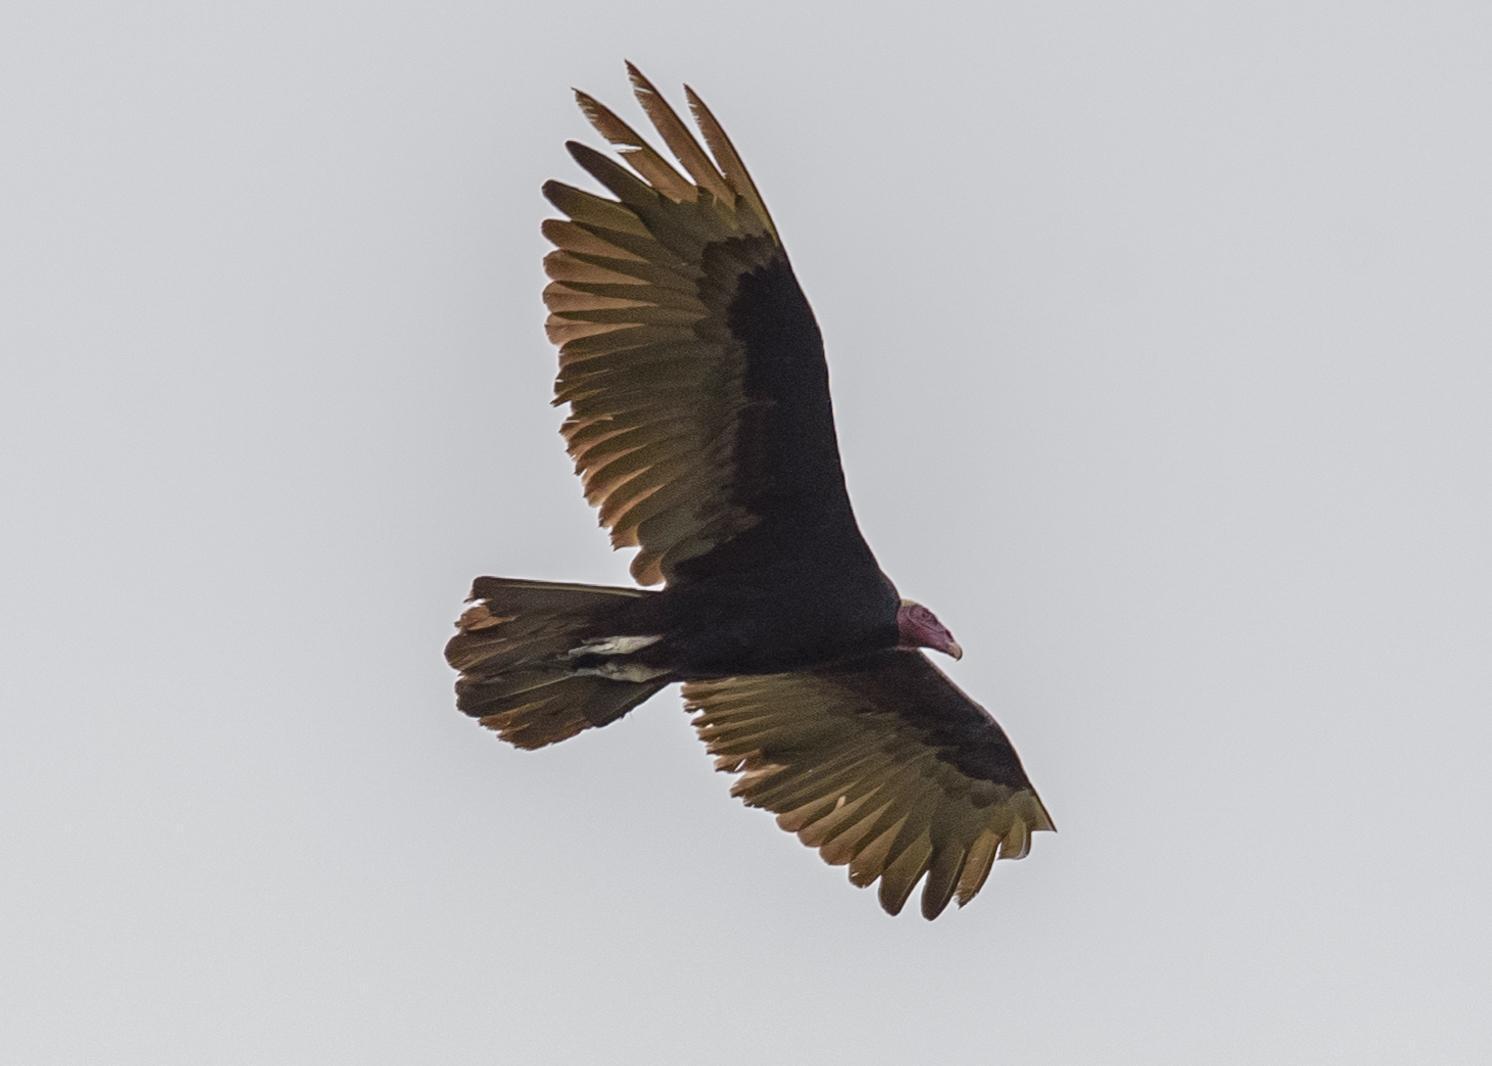 Turkey Vulture Photo by Keshava Mysore